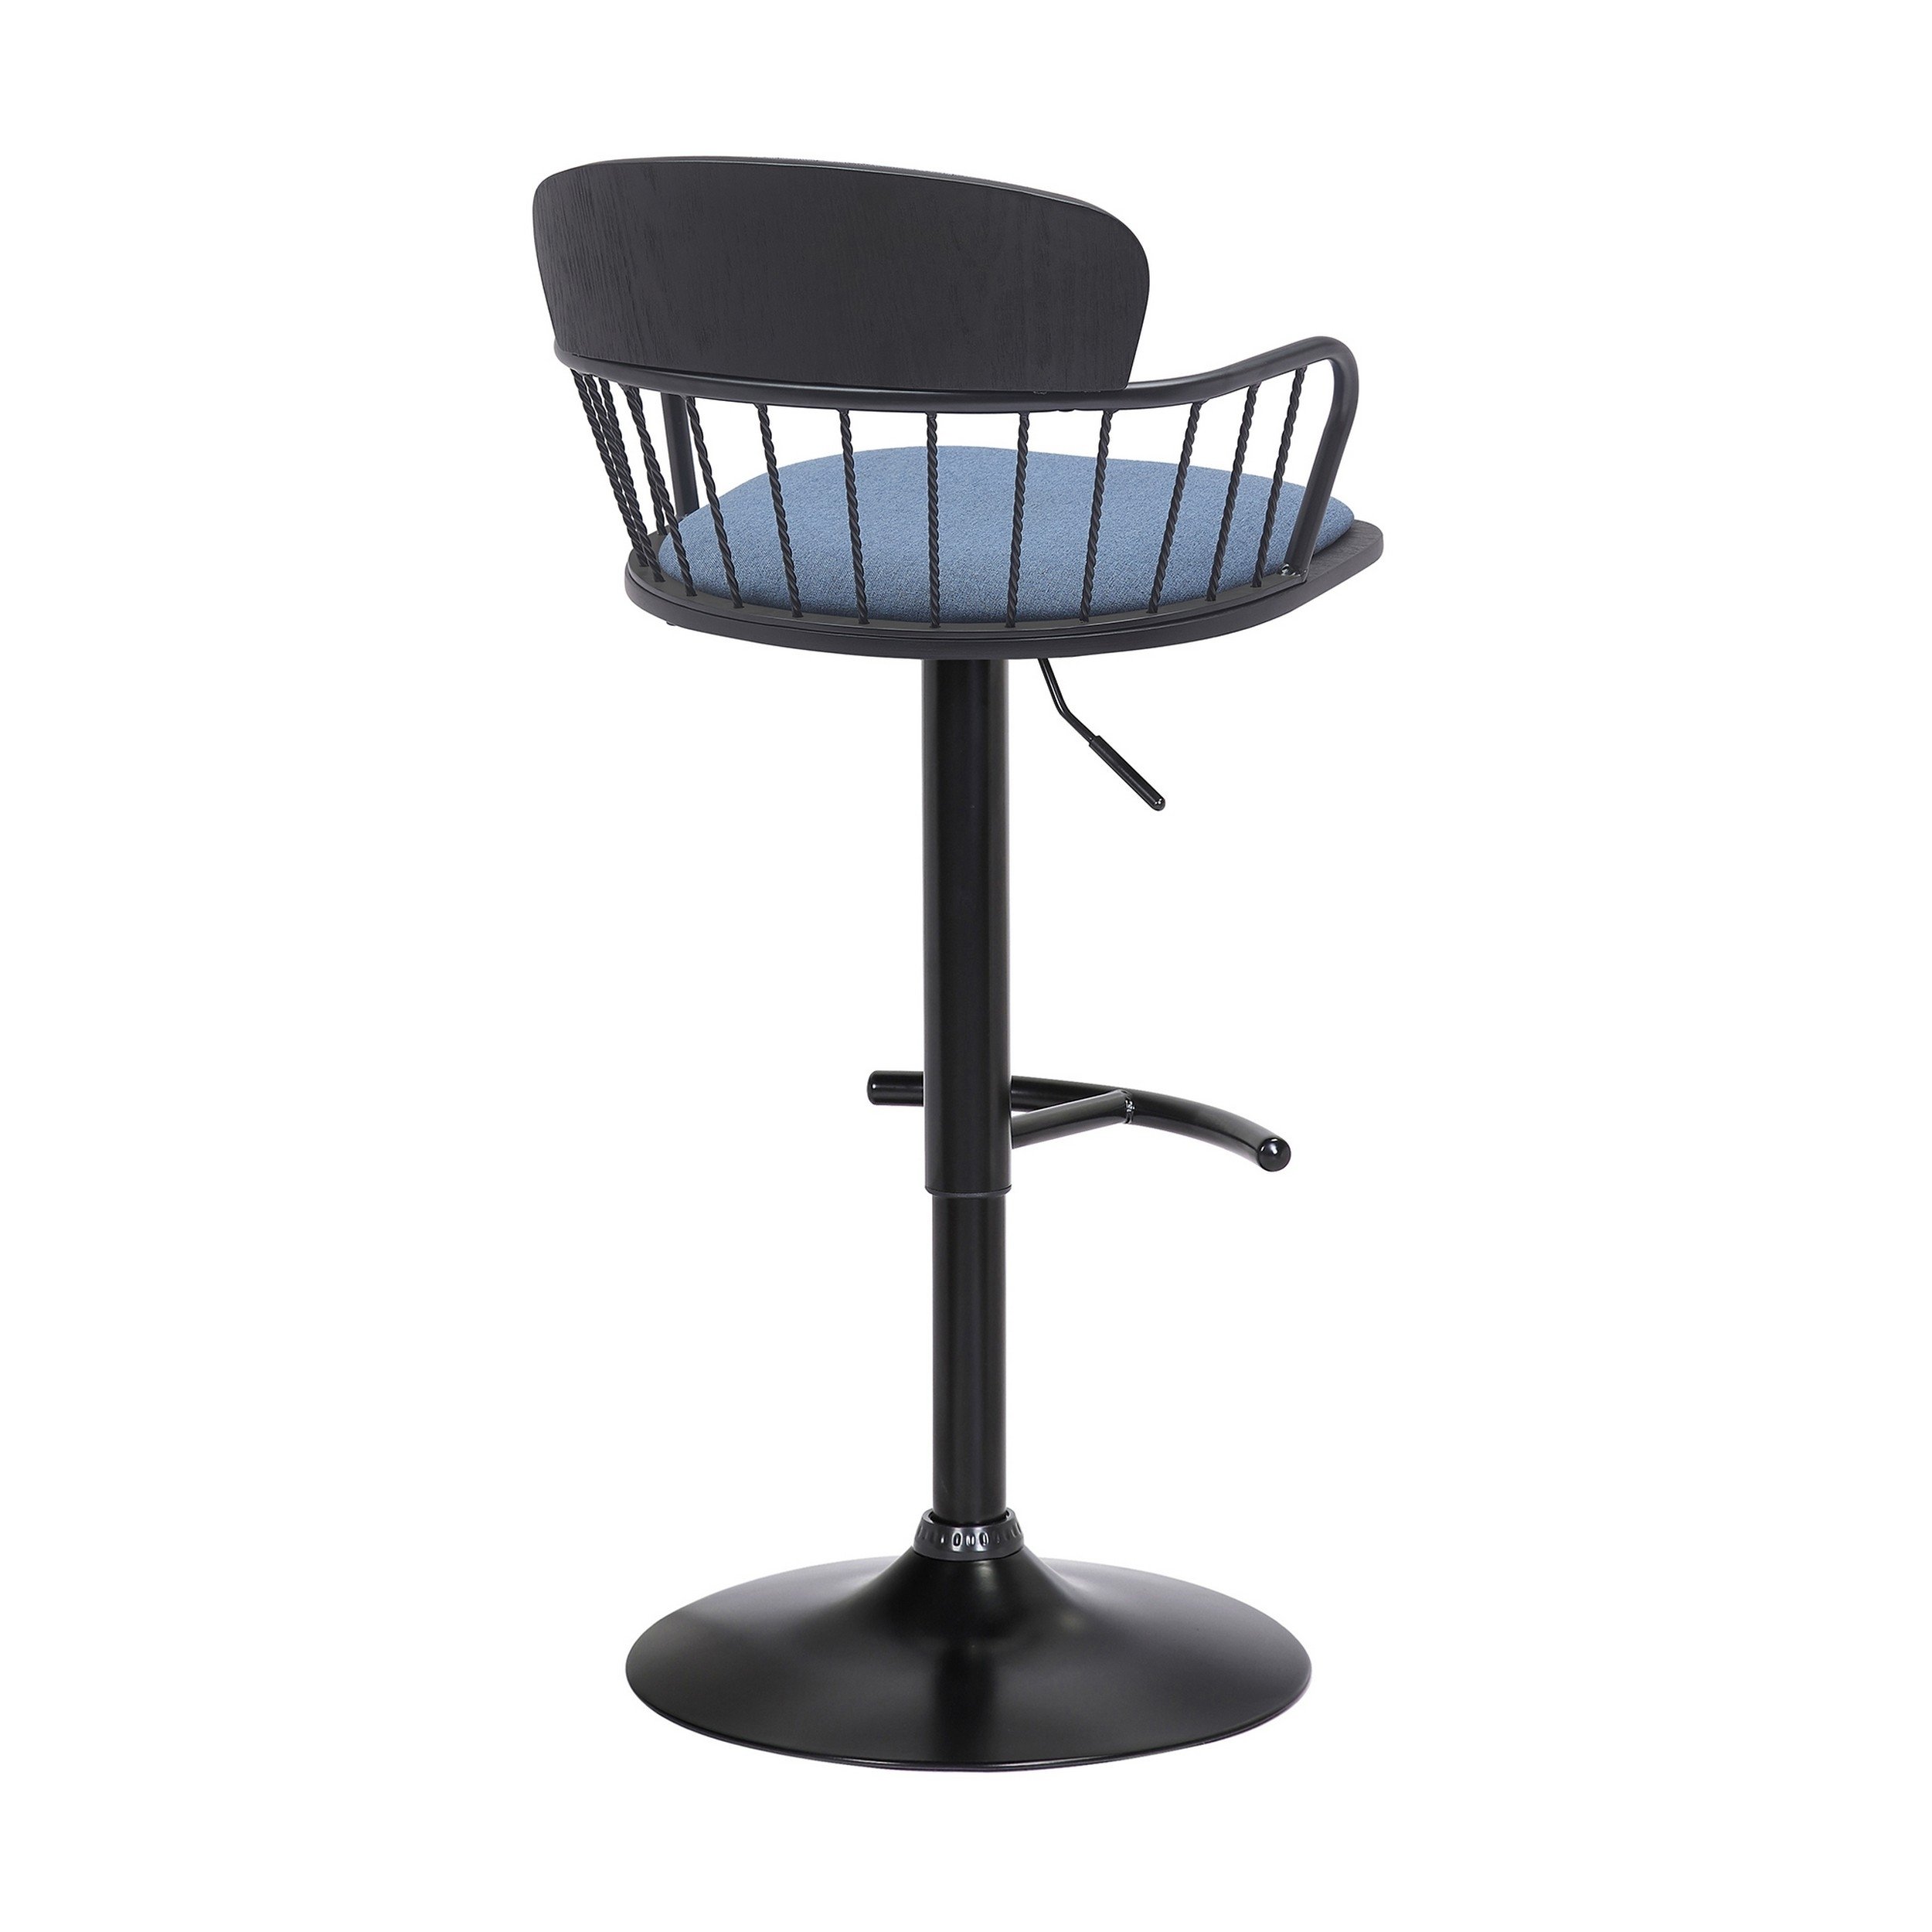 Nish 25-33 Inch Adjustable Barstool Chair, Soft Blue Fabric, Black Frame - Saltoro Sherpi